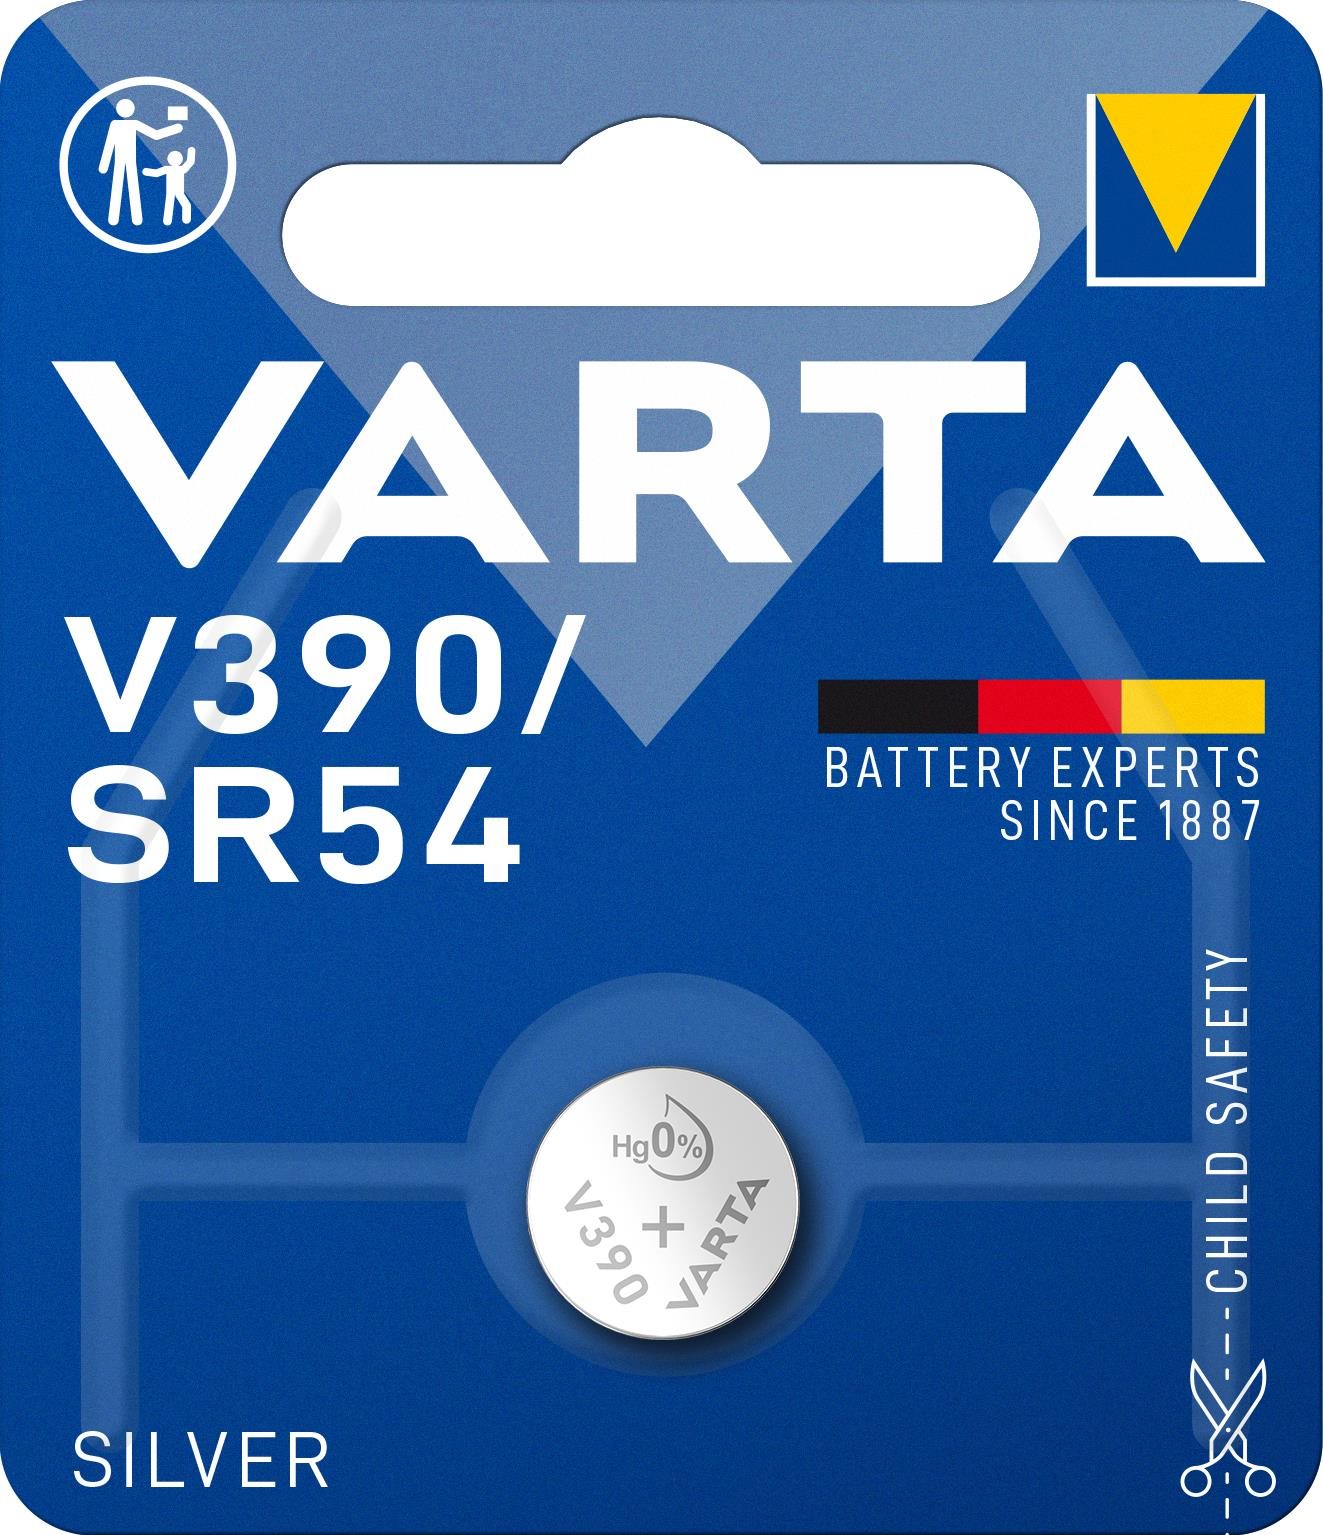 VARTA Speciális ezüst-oxid elem V390/SR54 1 db